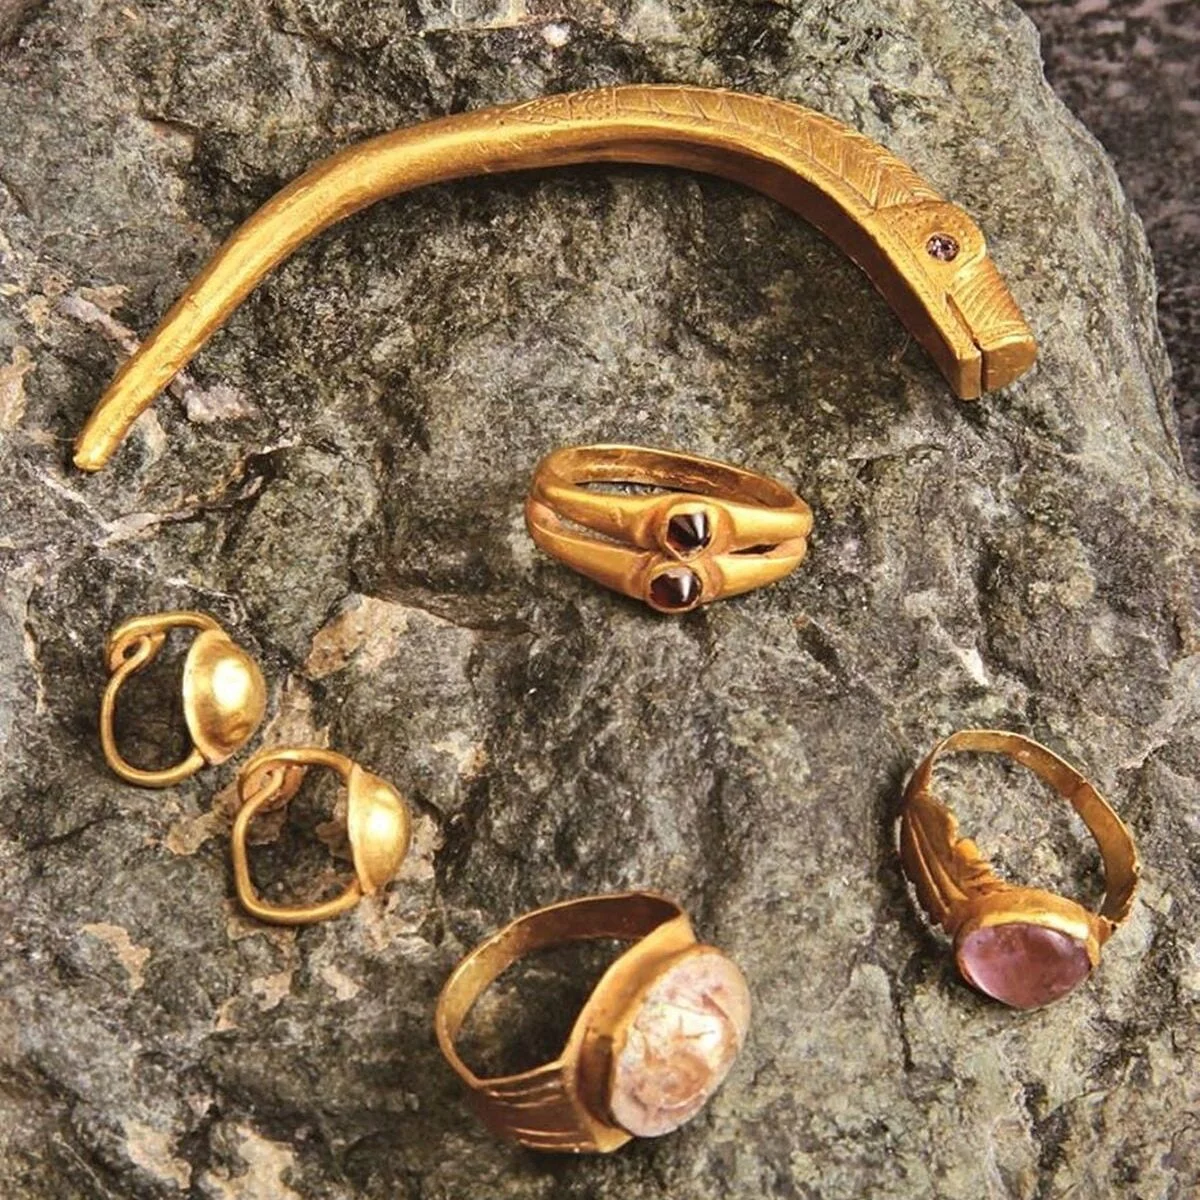 history of jewelry